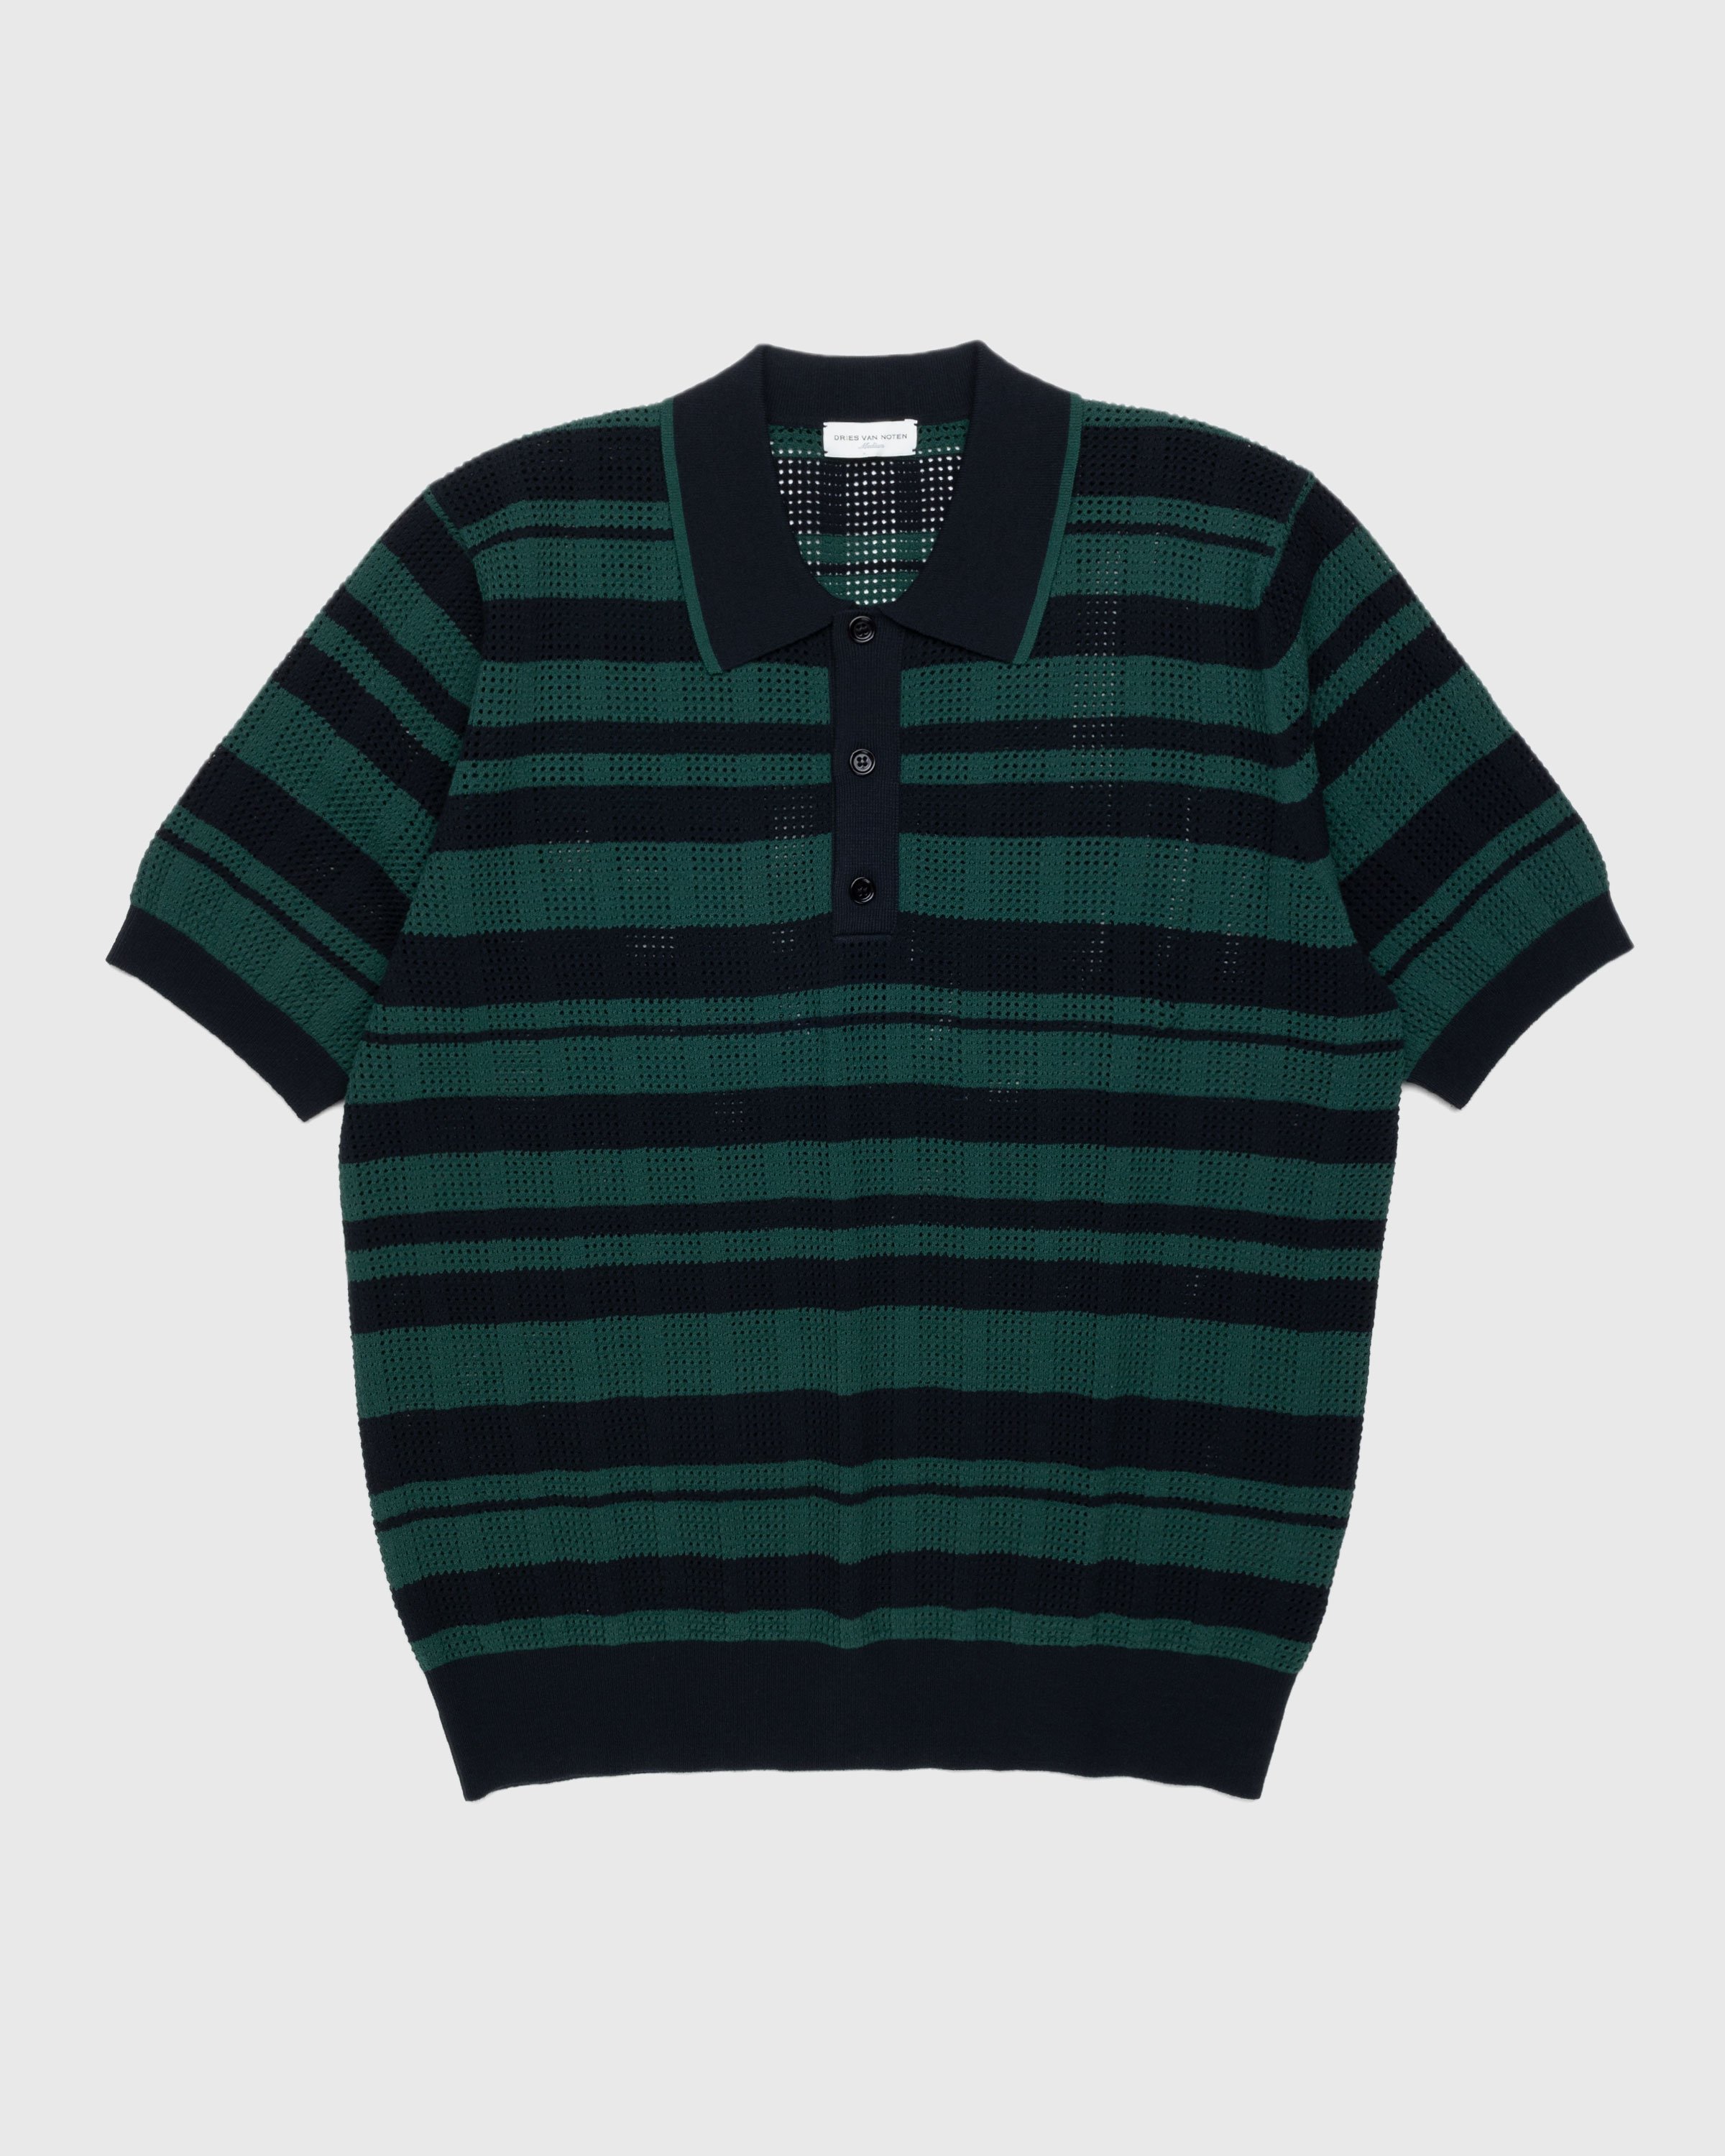 Dries van Noten - Mirko Striped Polo Shirt Black - Clothing - Black - Image 1